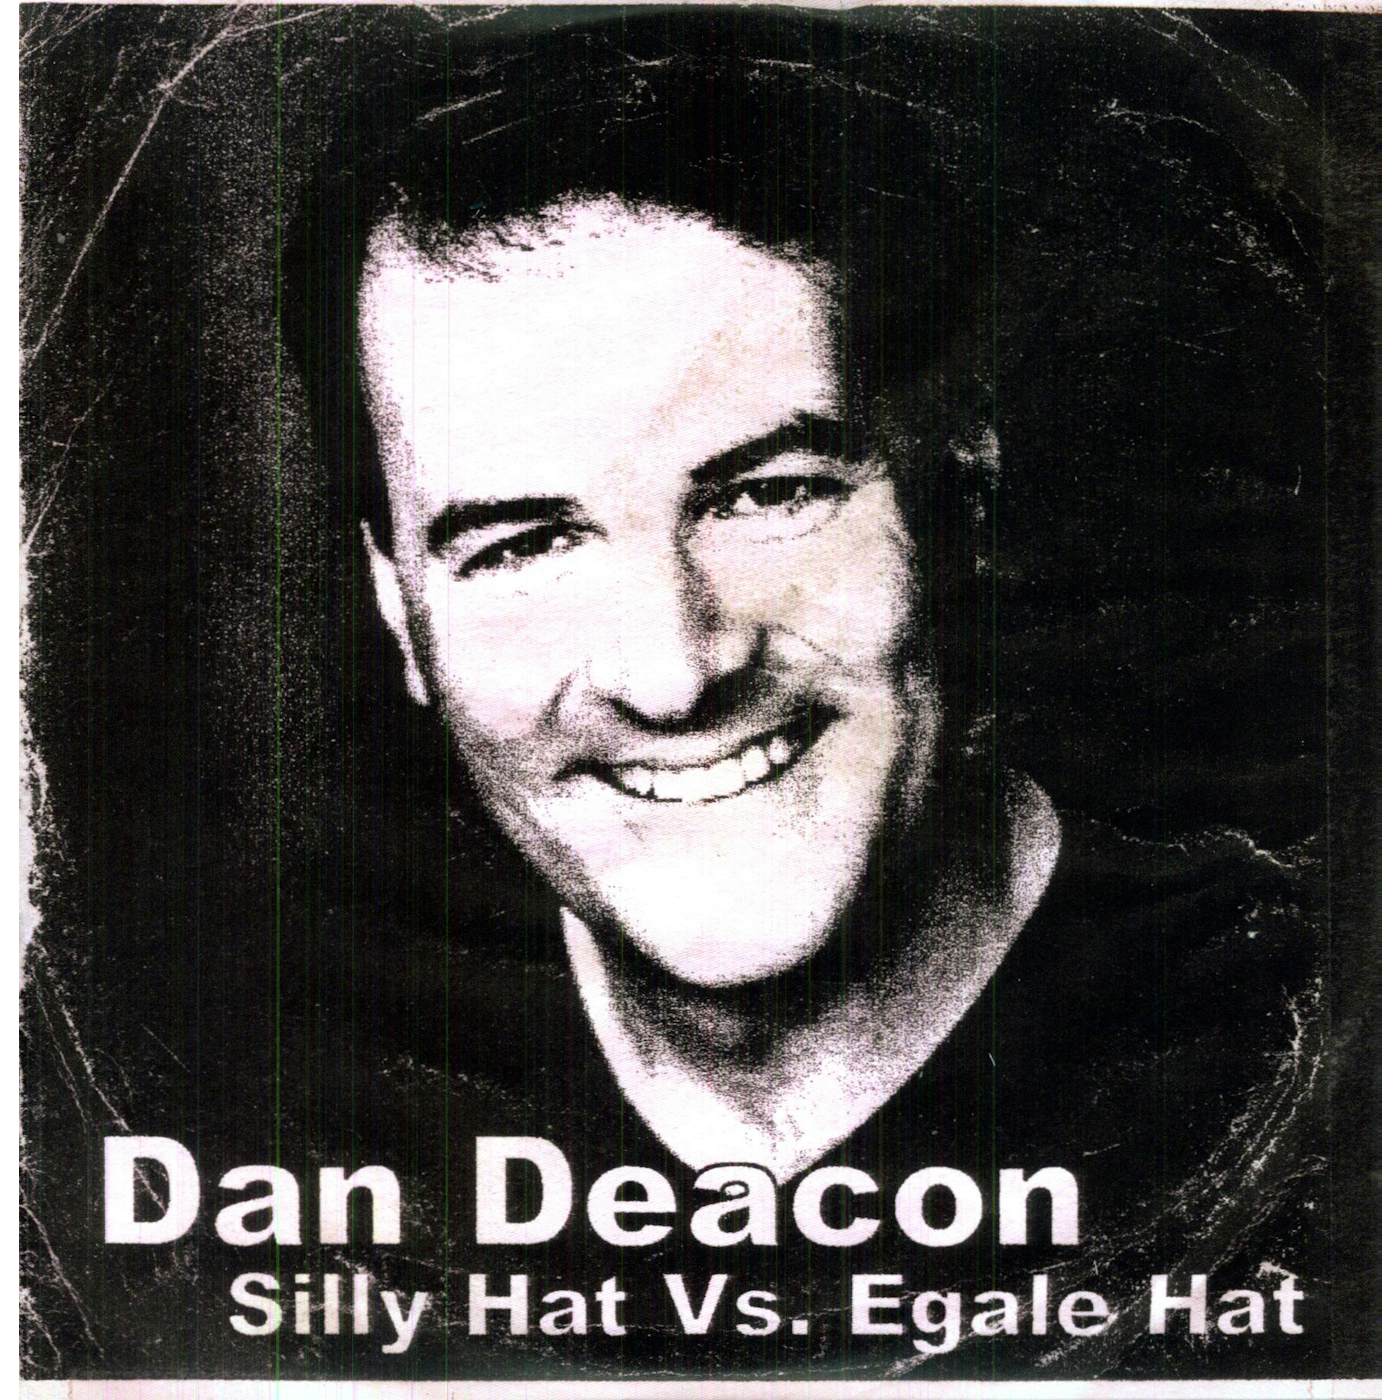 Dan Deacon SILLY HAT VS EGALE HAT Vinyl Record